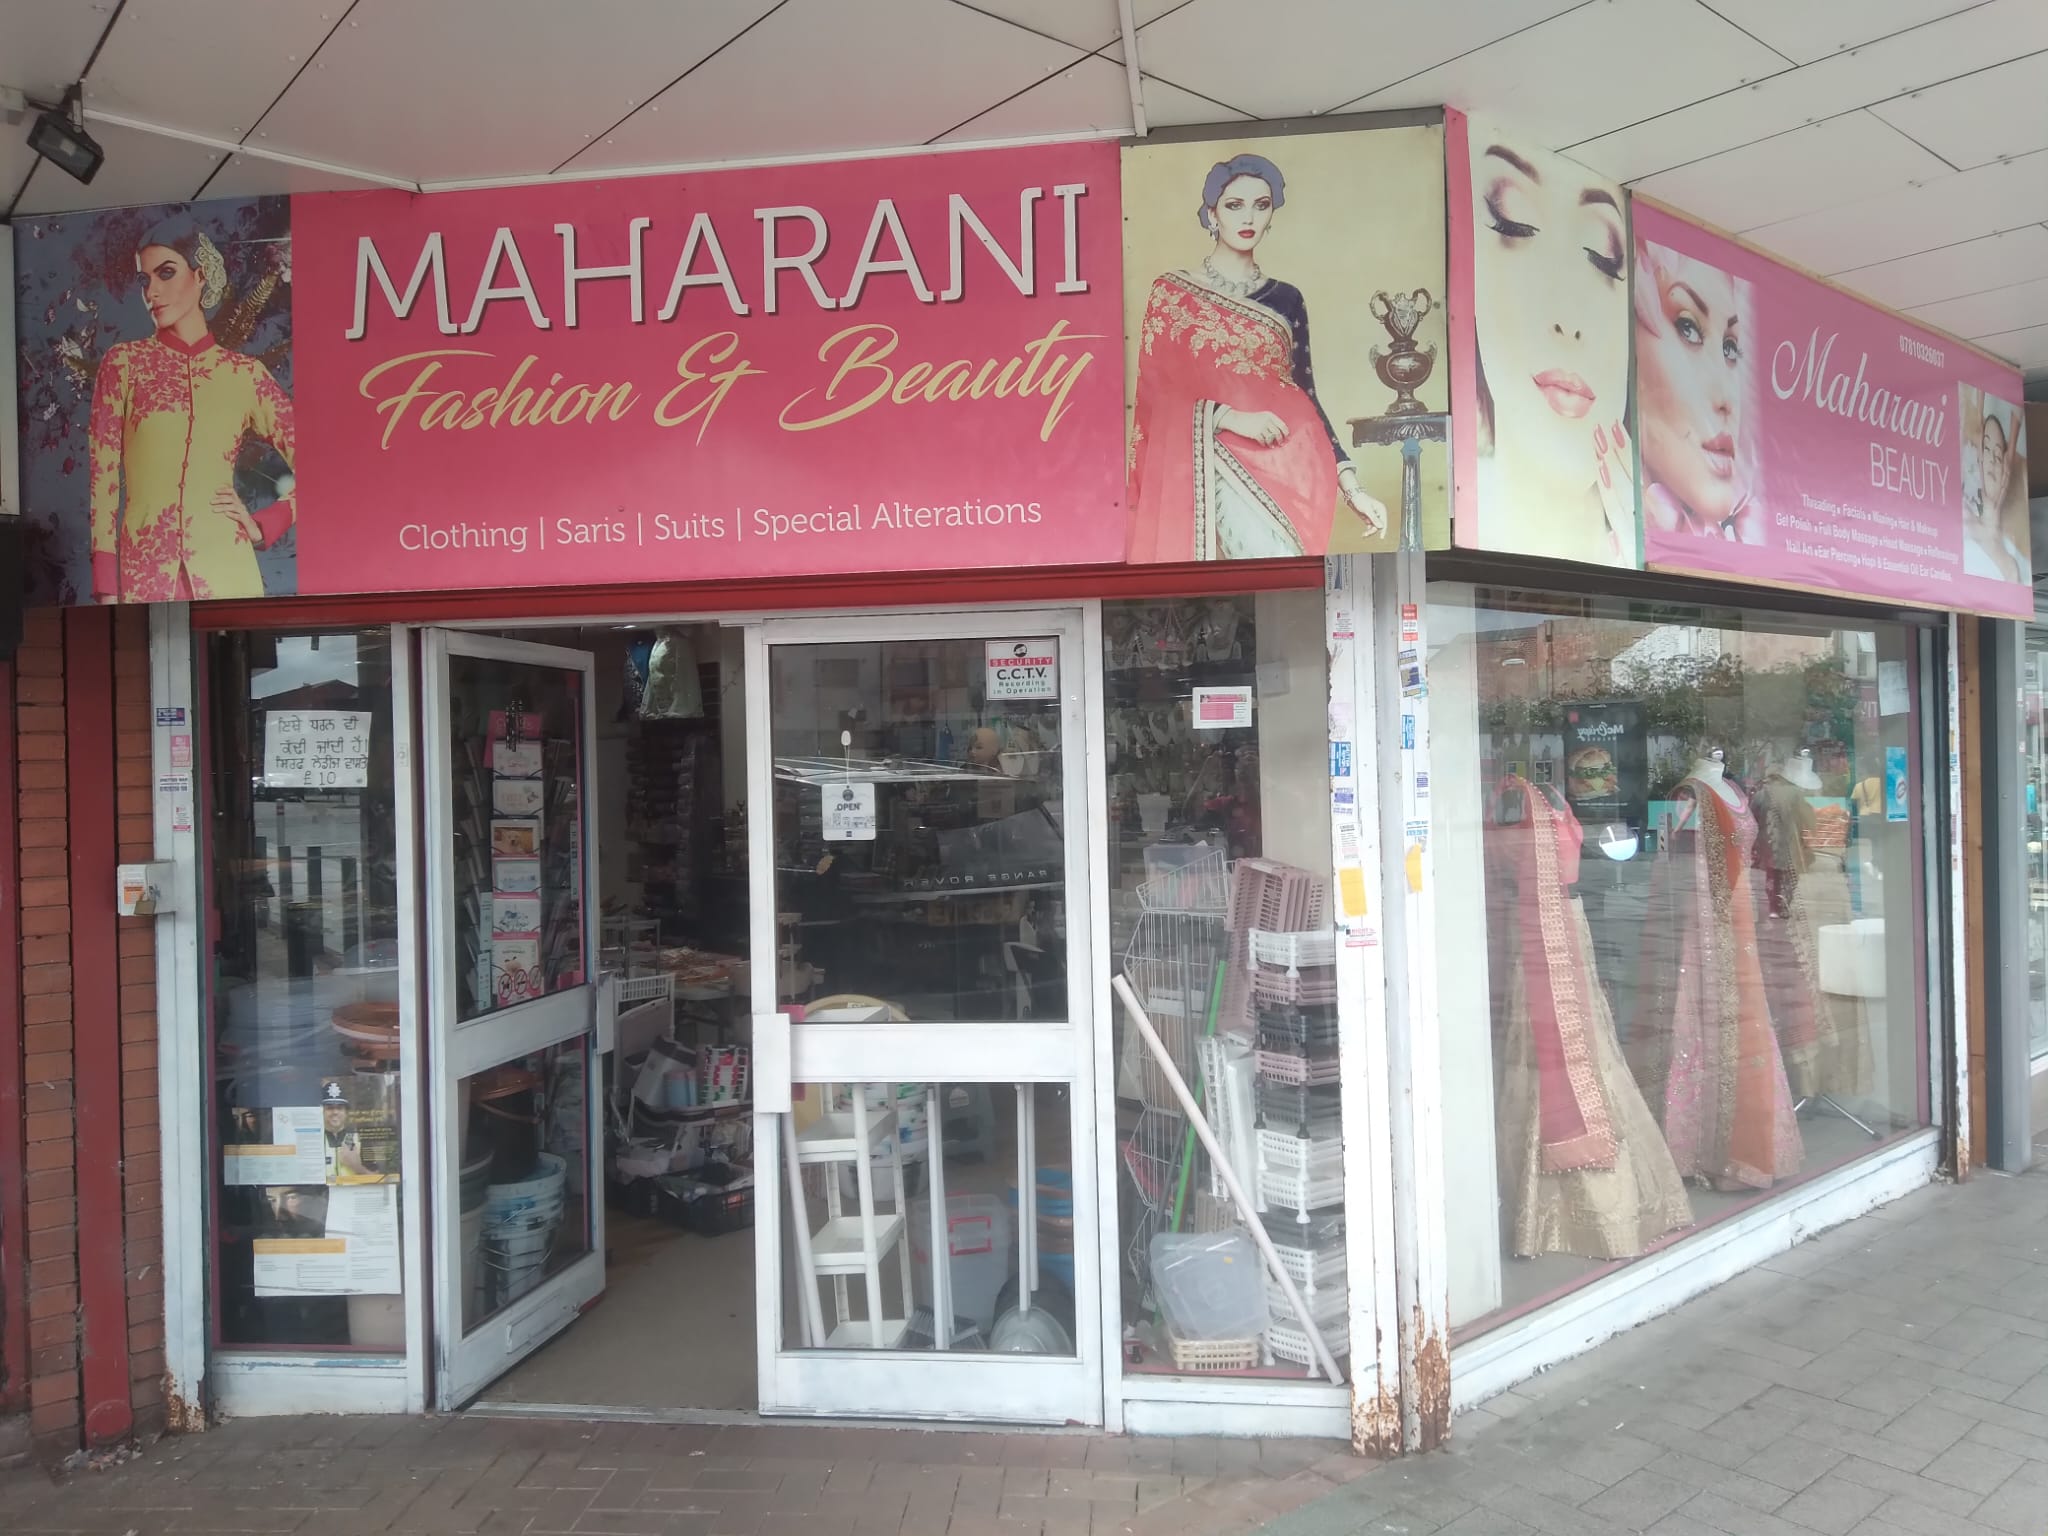 Deals at Maharani West Bromwich